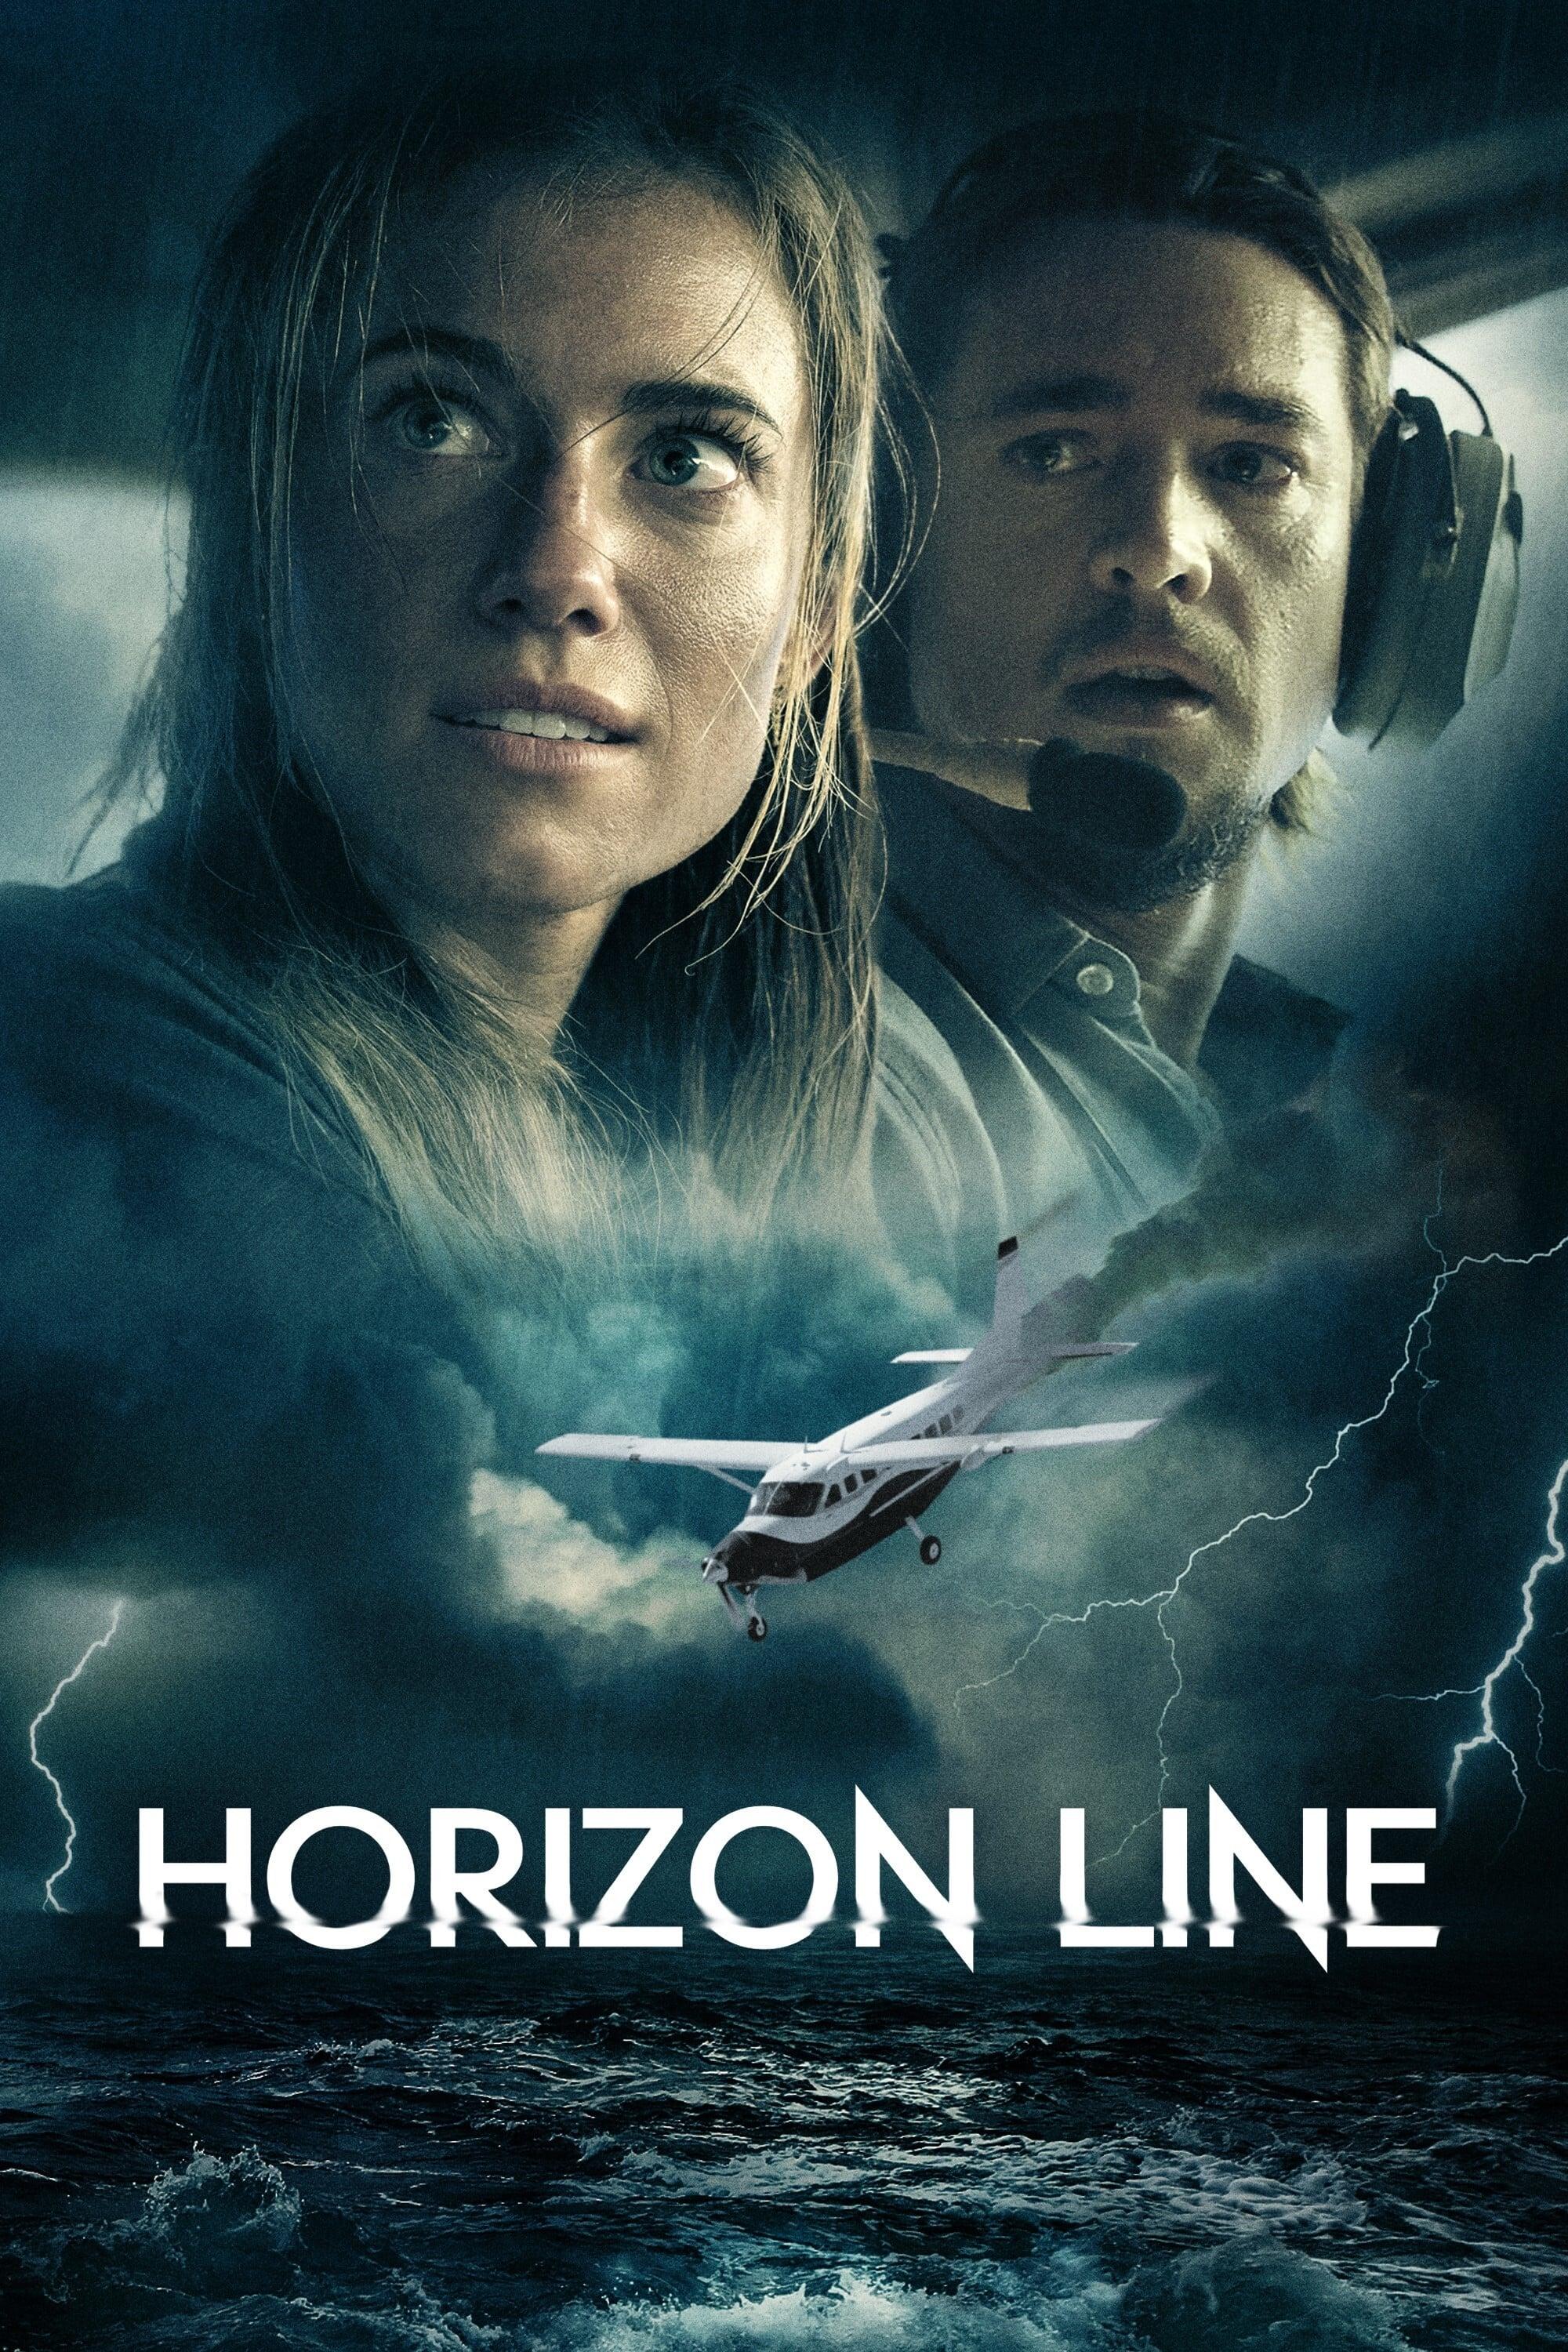 Horizon Line poster